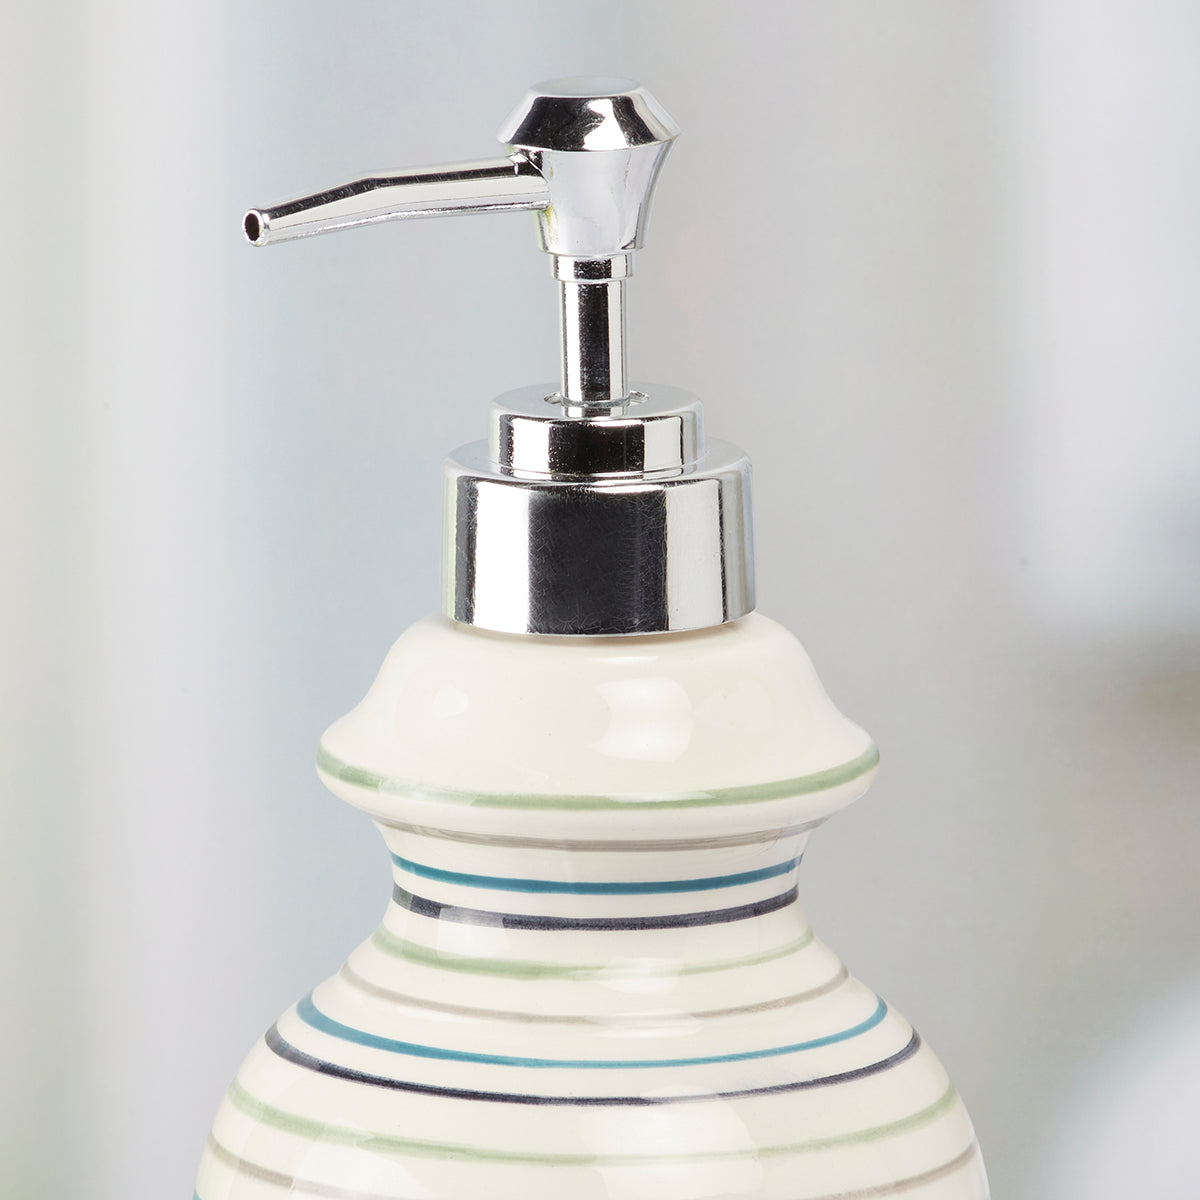 Ceramic Soap Dispenser Pump for Bathroom for Bath Gel, Lotion, Shampoo (7641)